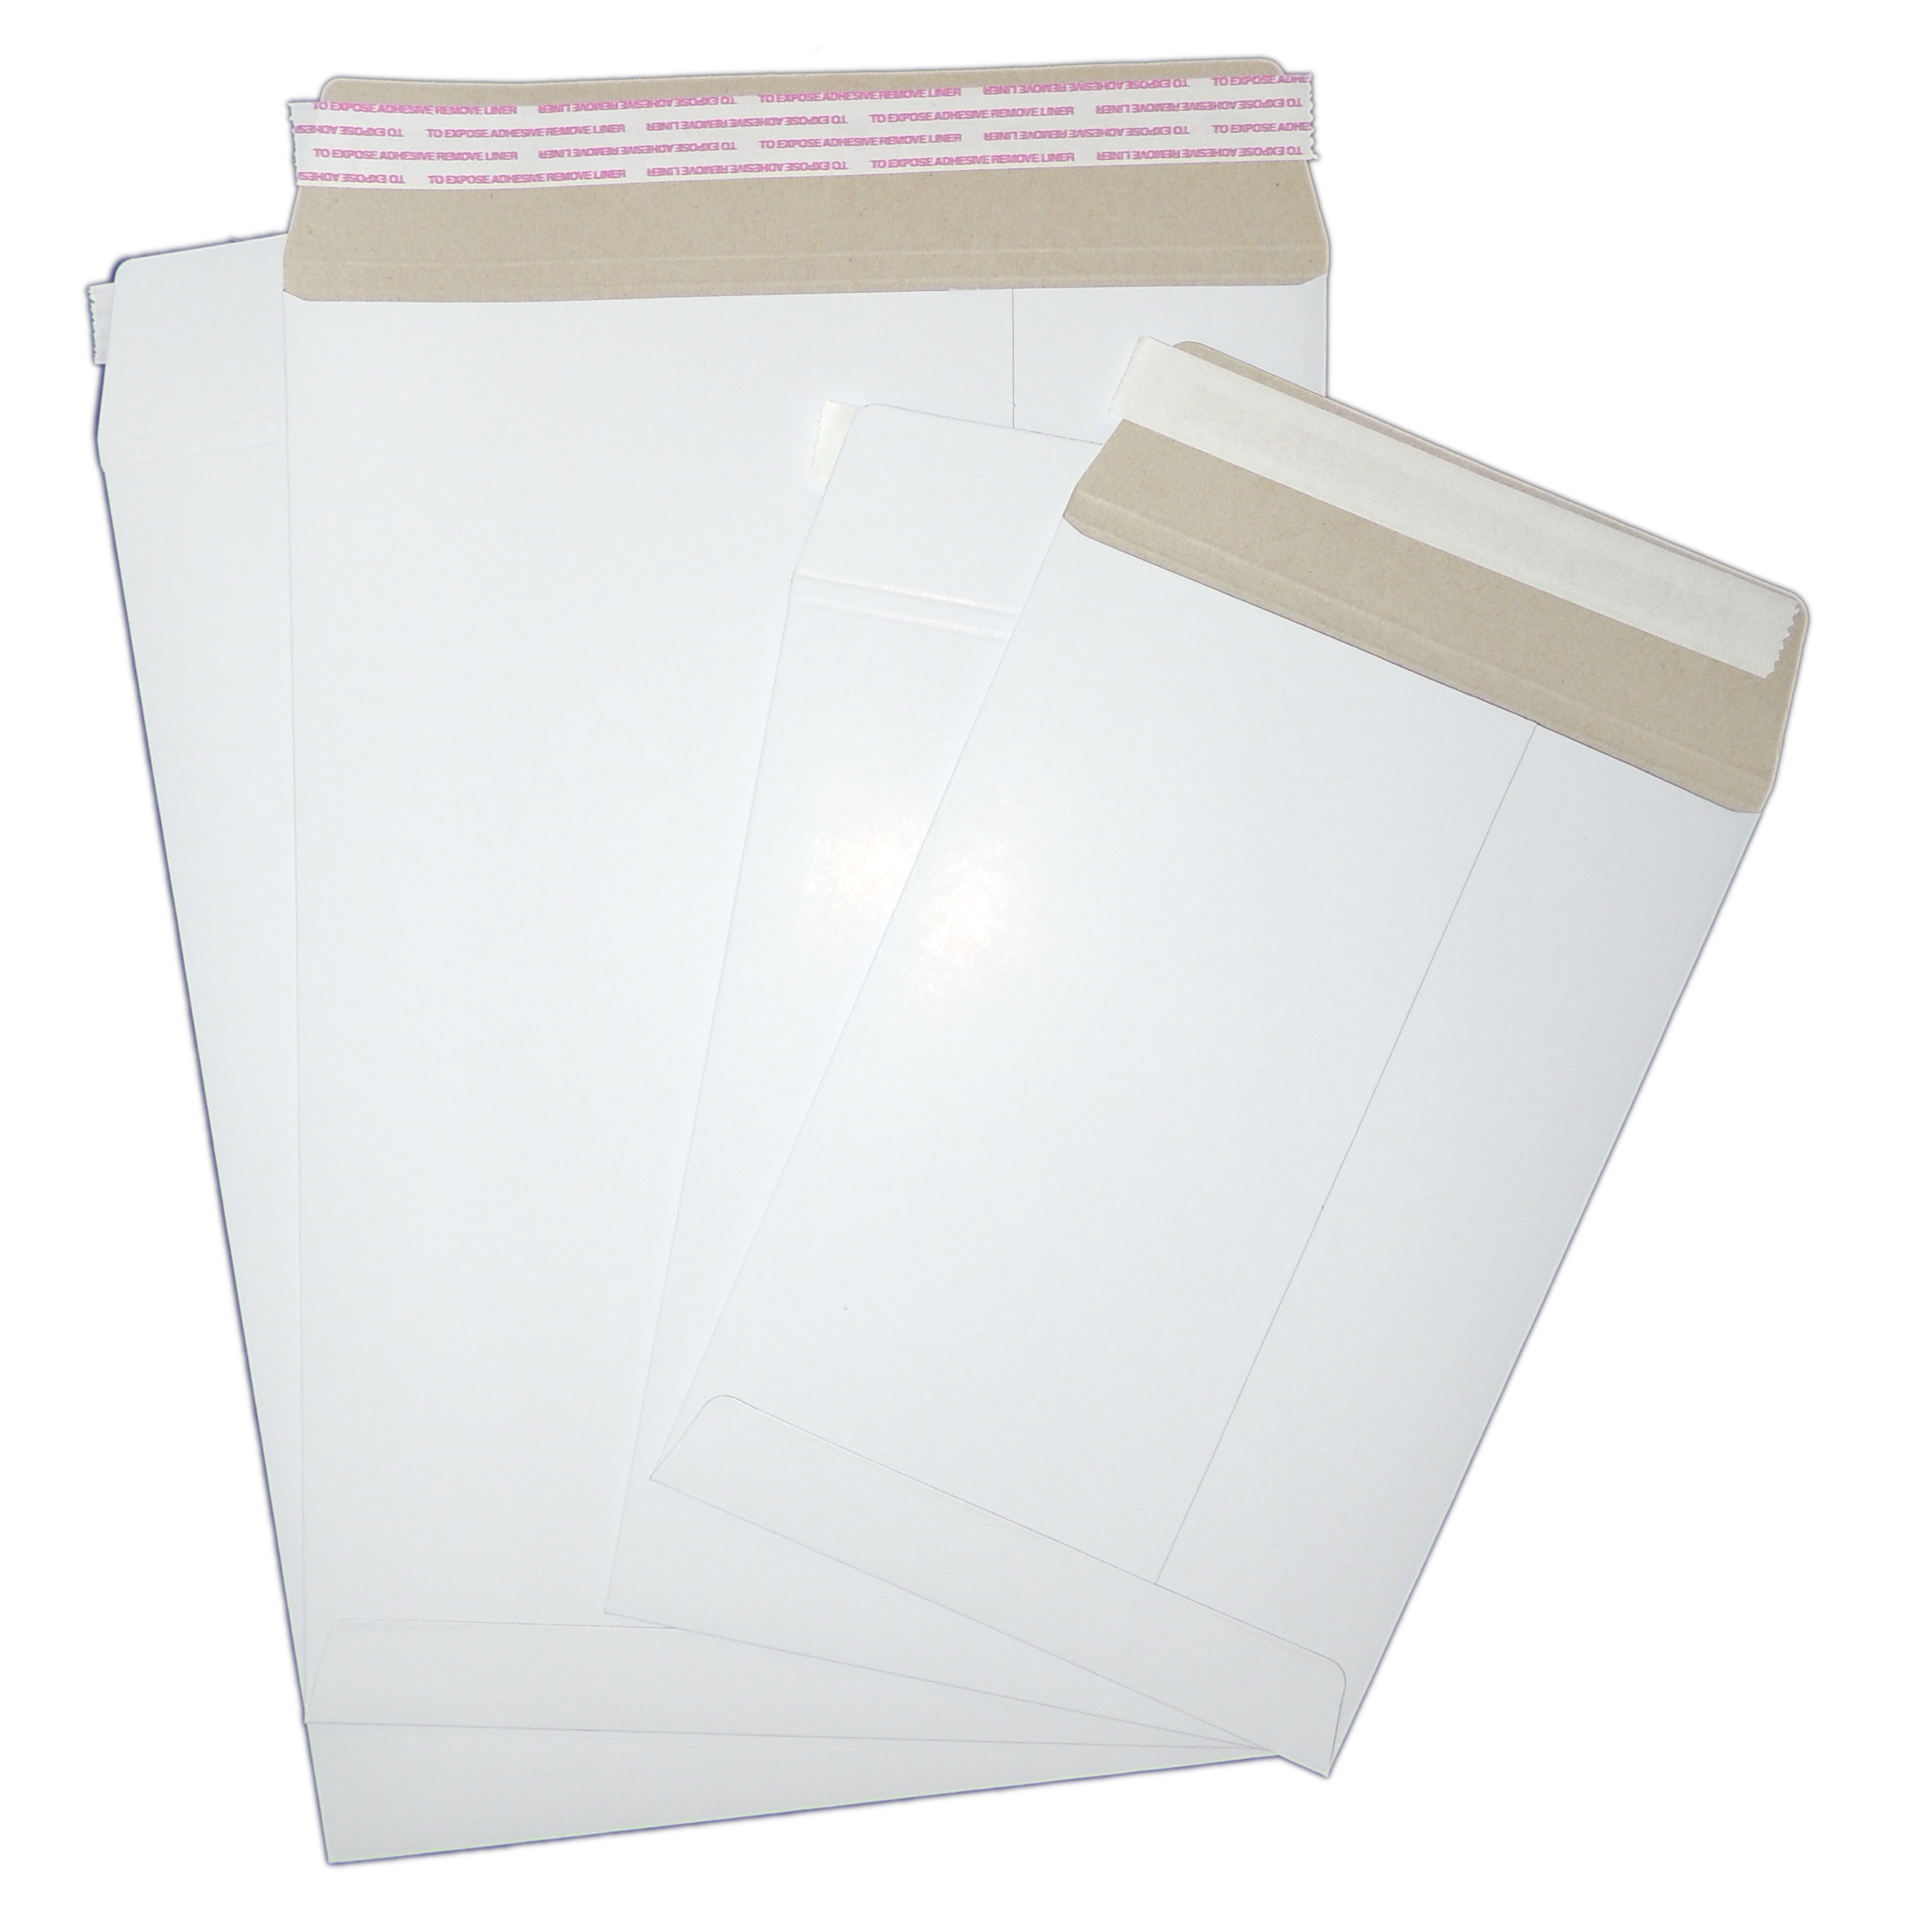 All Board Calendar Envelopes - A3/C3 - 457mm x 330mm - White - Box of 100